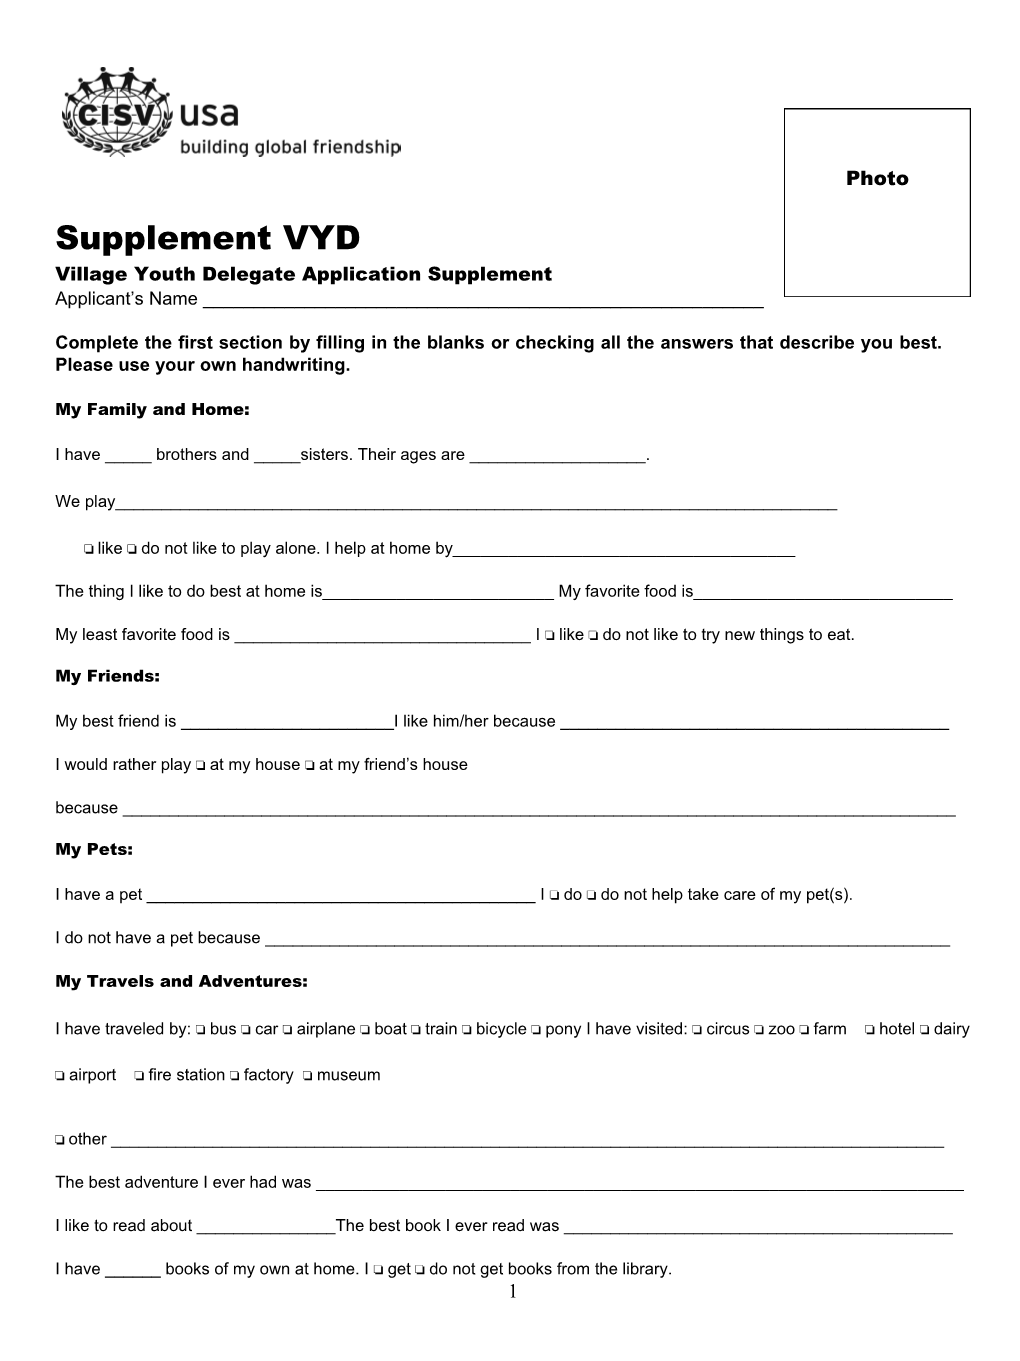 Village Youth Delegate Application Supplement